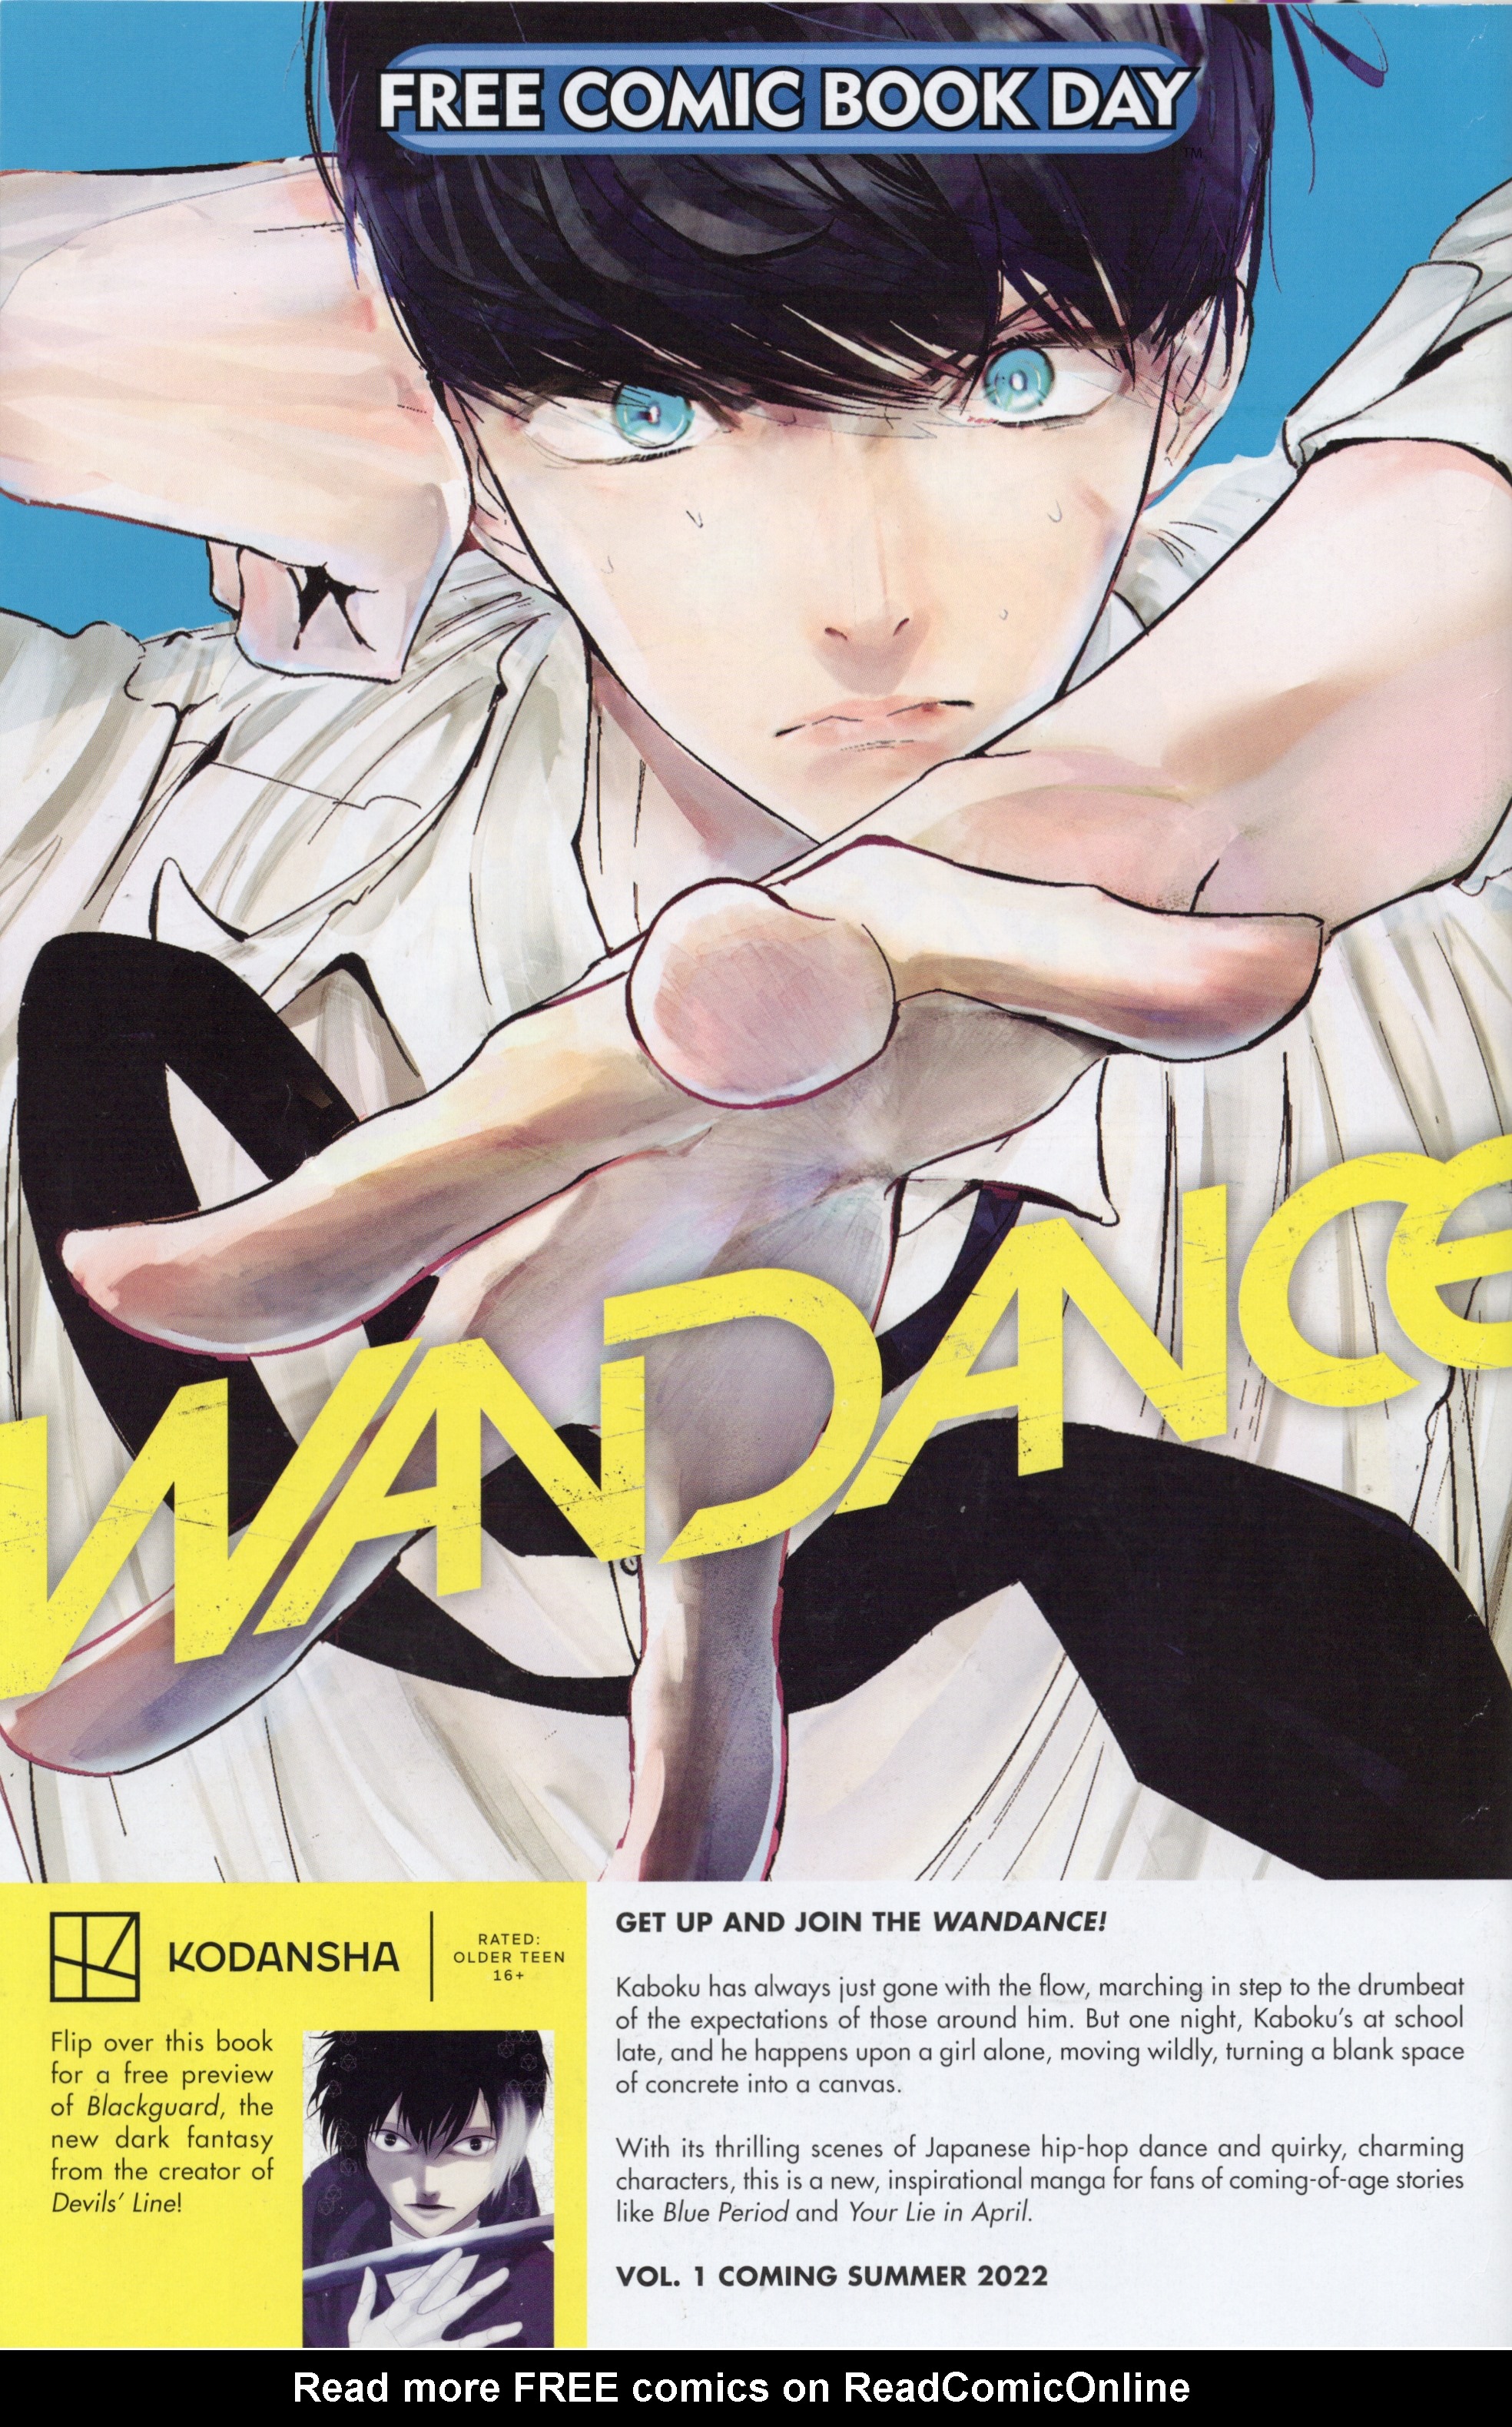 Read online Free Comic Book Day 2022 comic -  Issue # Kodansha Wardance and Blackguard Flipbook - 1